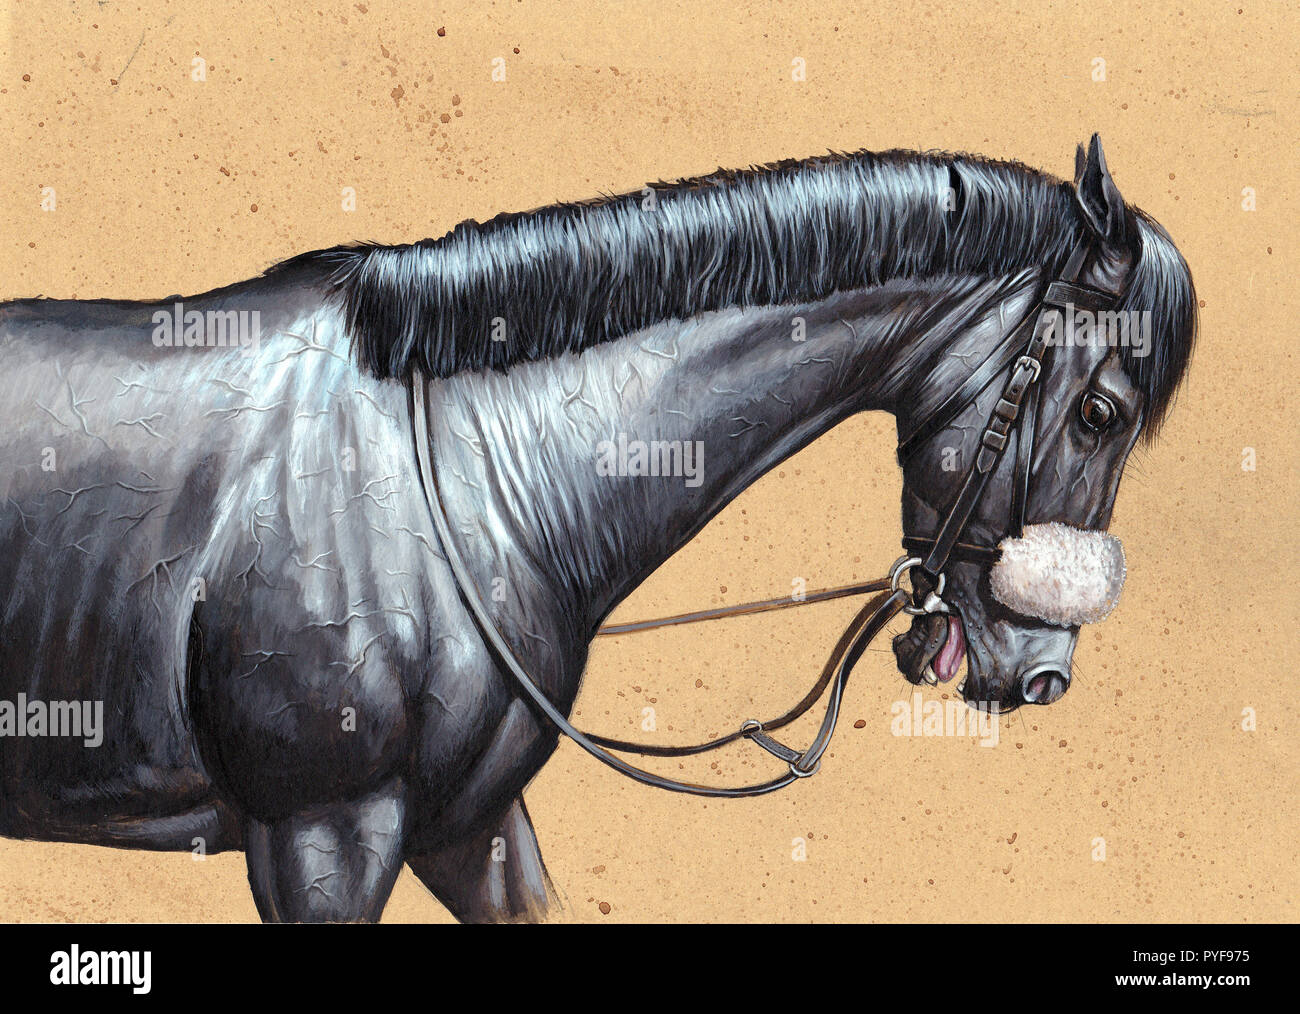 Horse illustration. Horse after race. Black thoroughbred. Animal portrait. Stock Photo